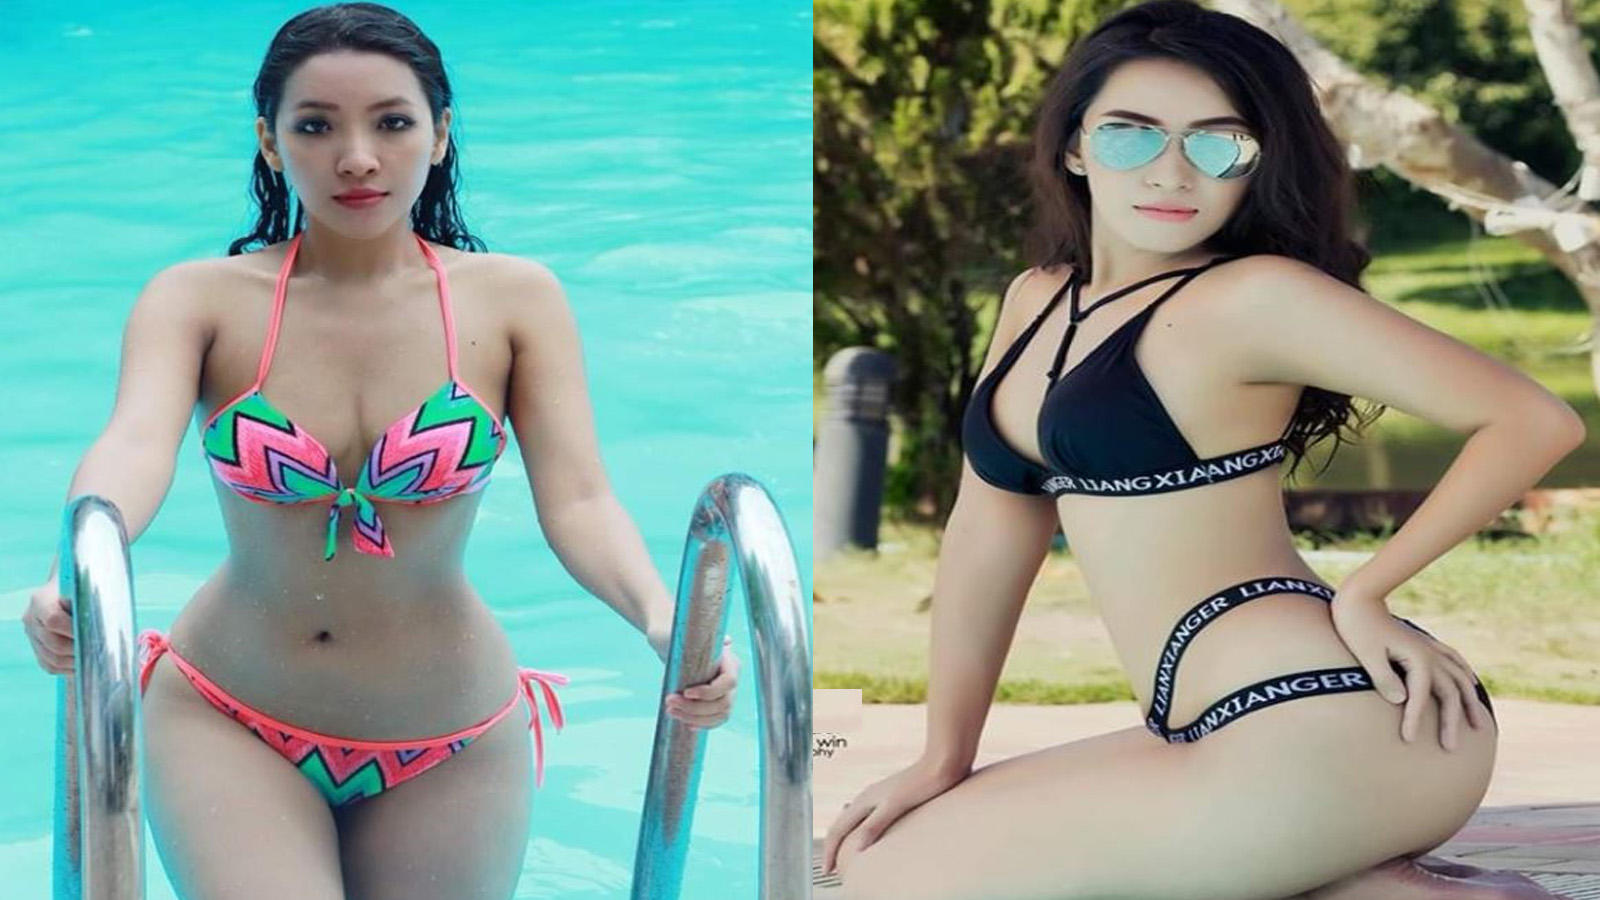 Myanmar Doctor Turned Models Medical License Revoked Over Her Bikini Photos On Social Media